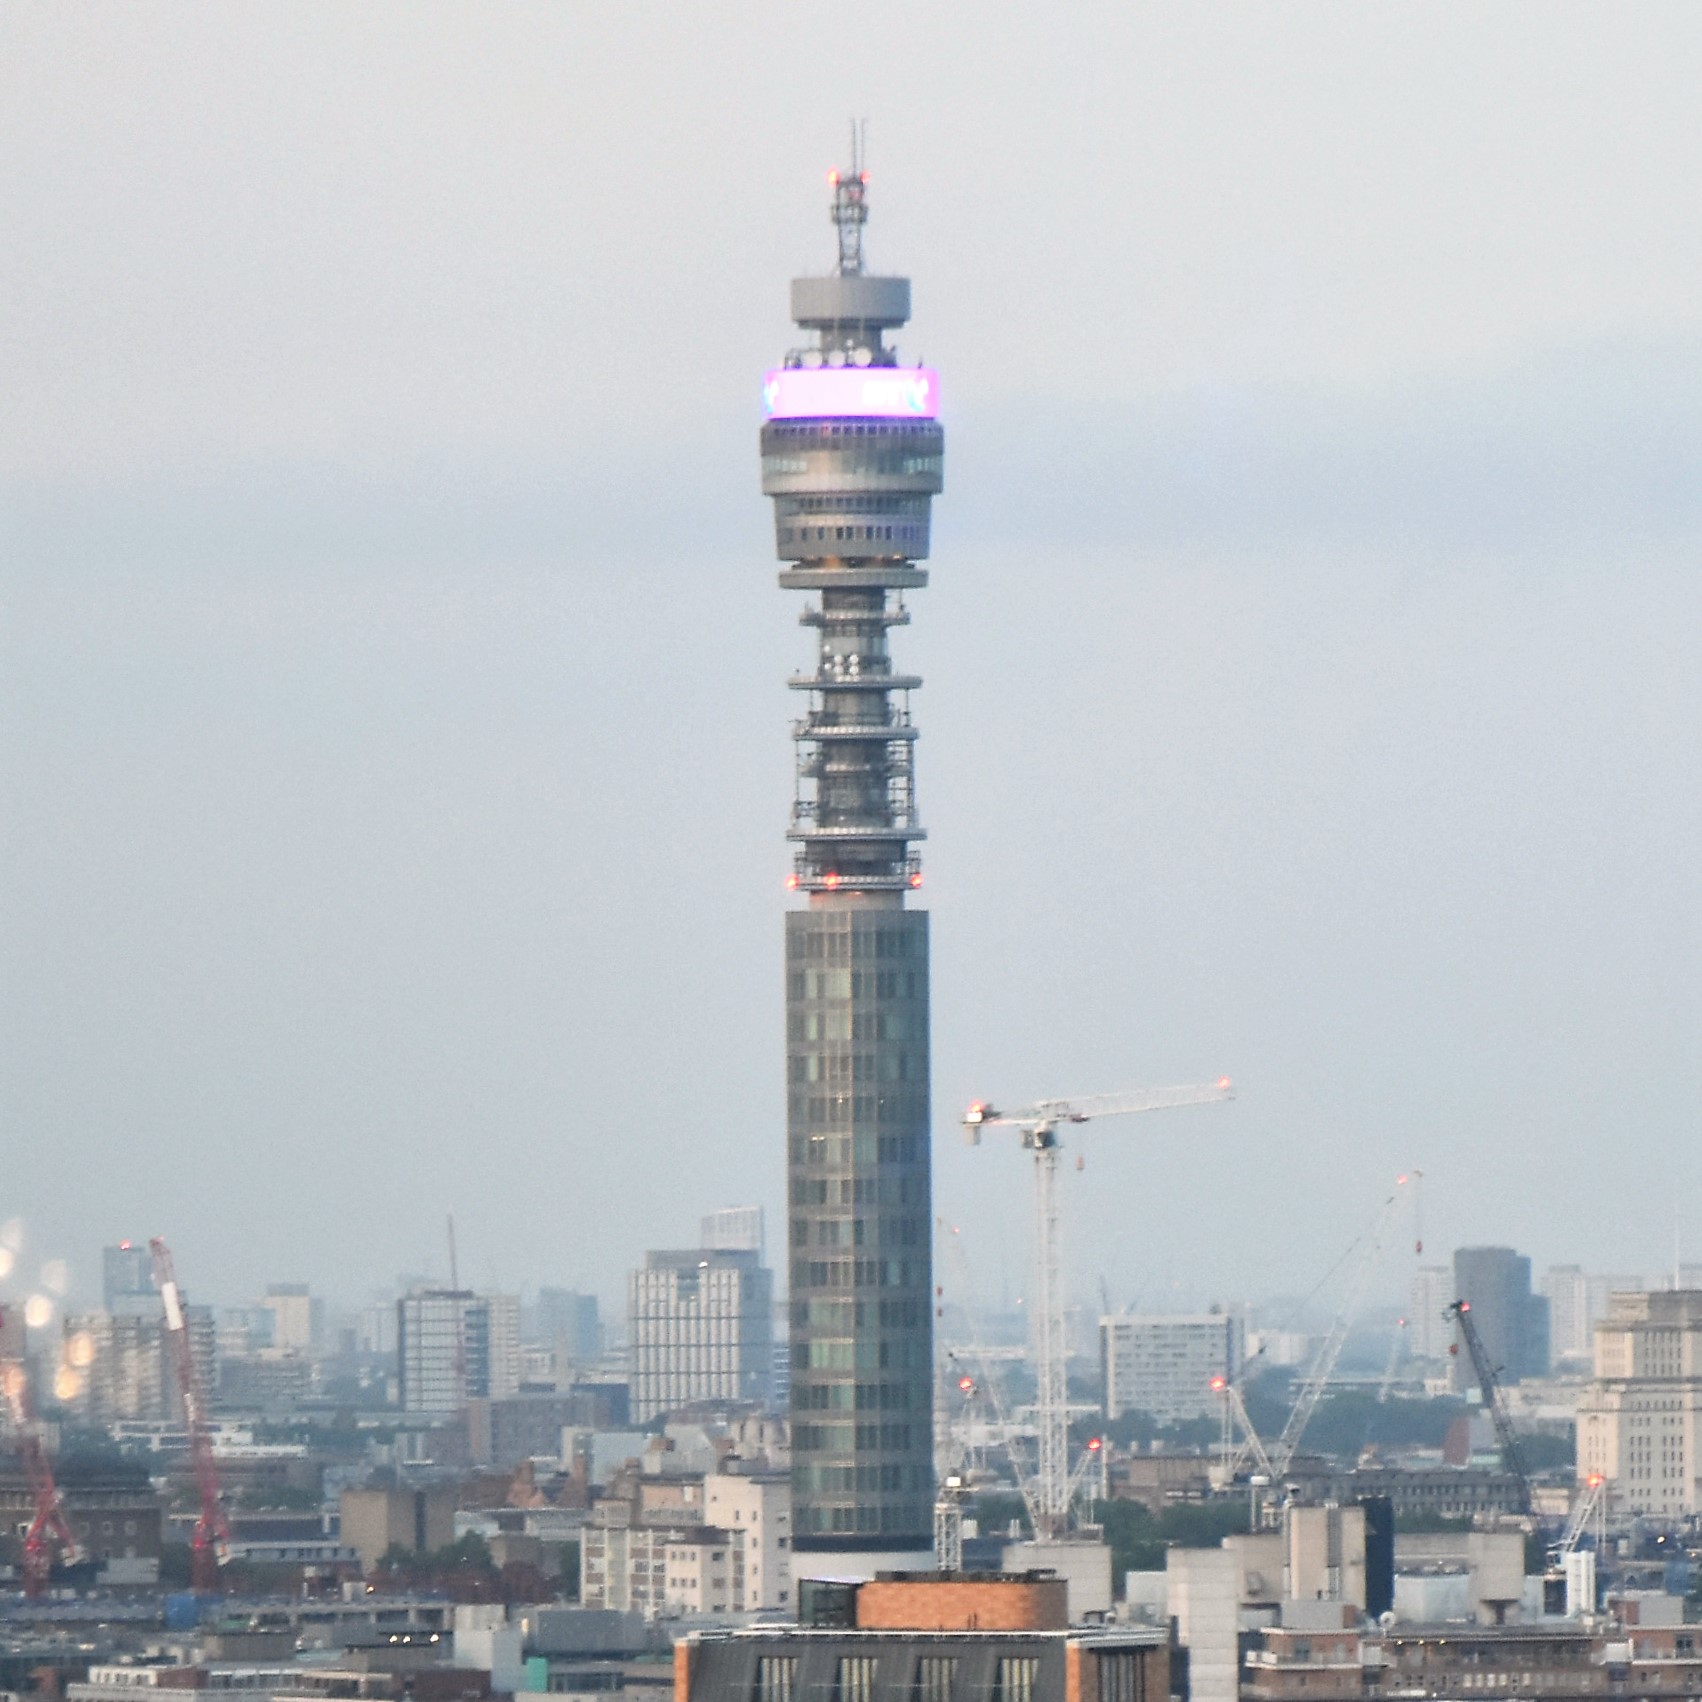 bt tower london visit